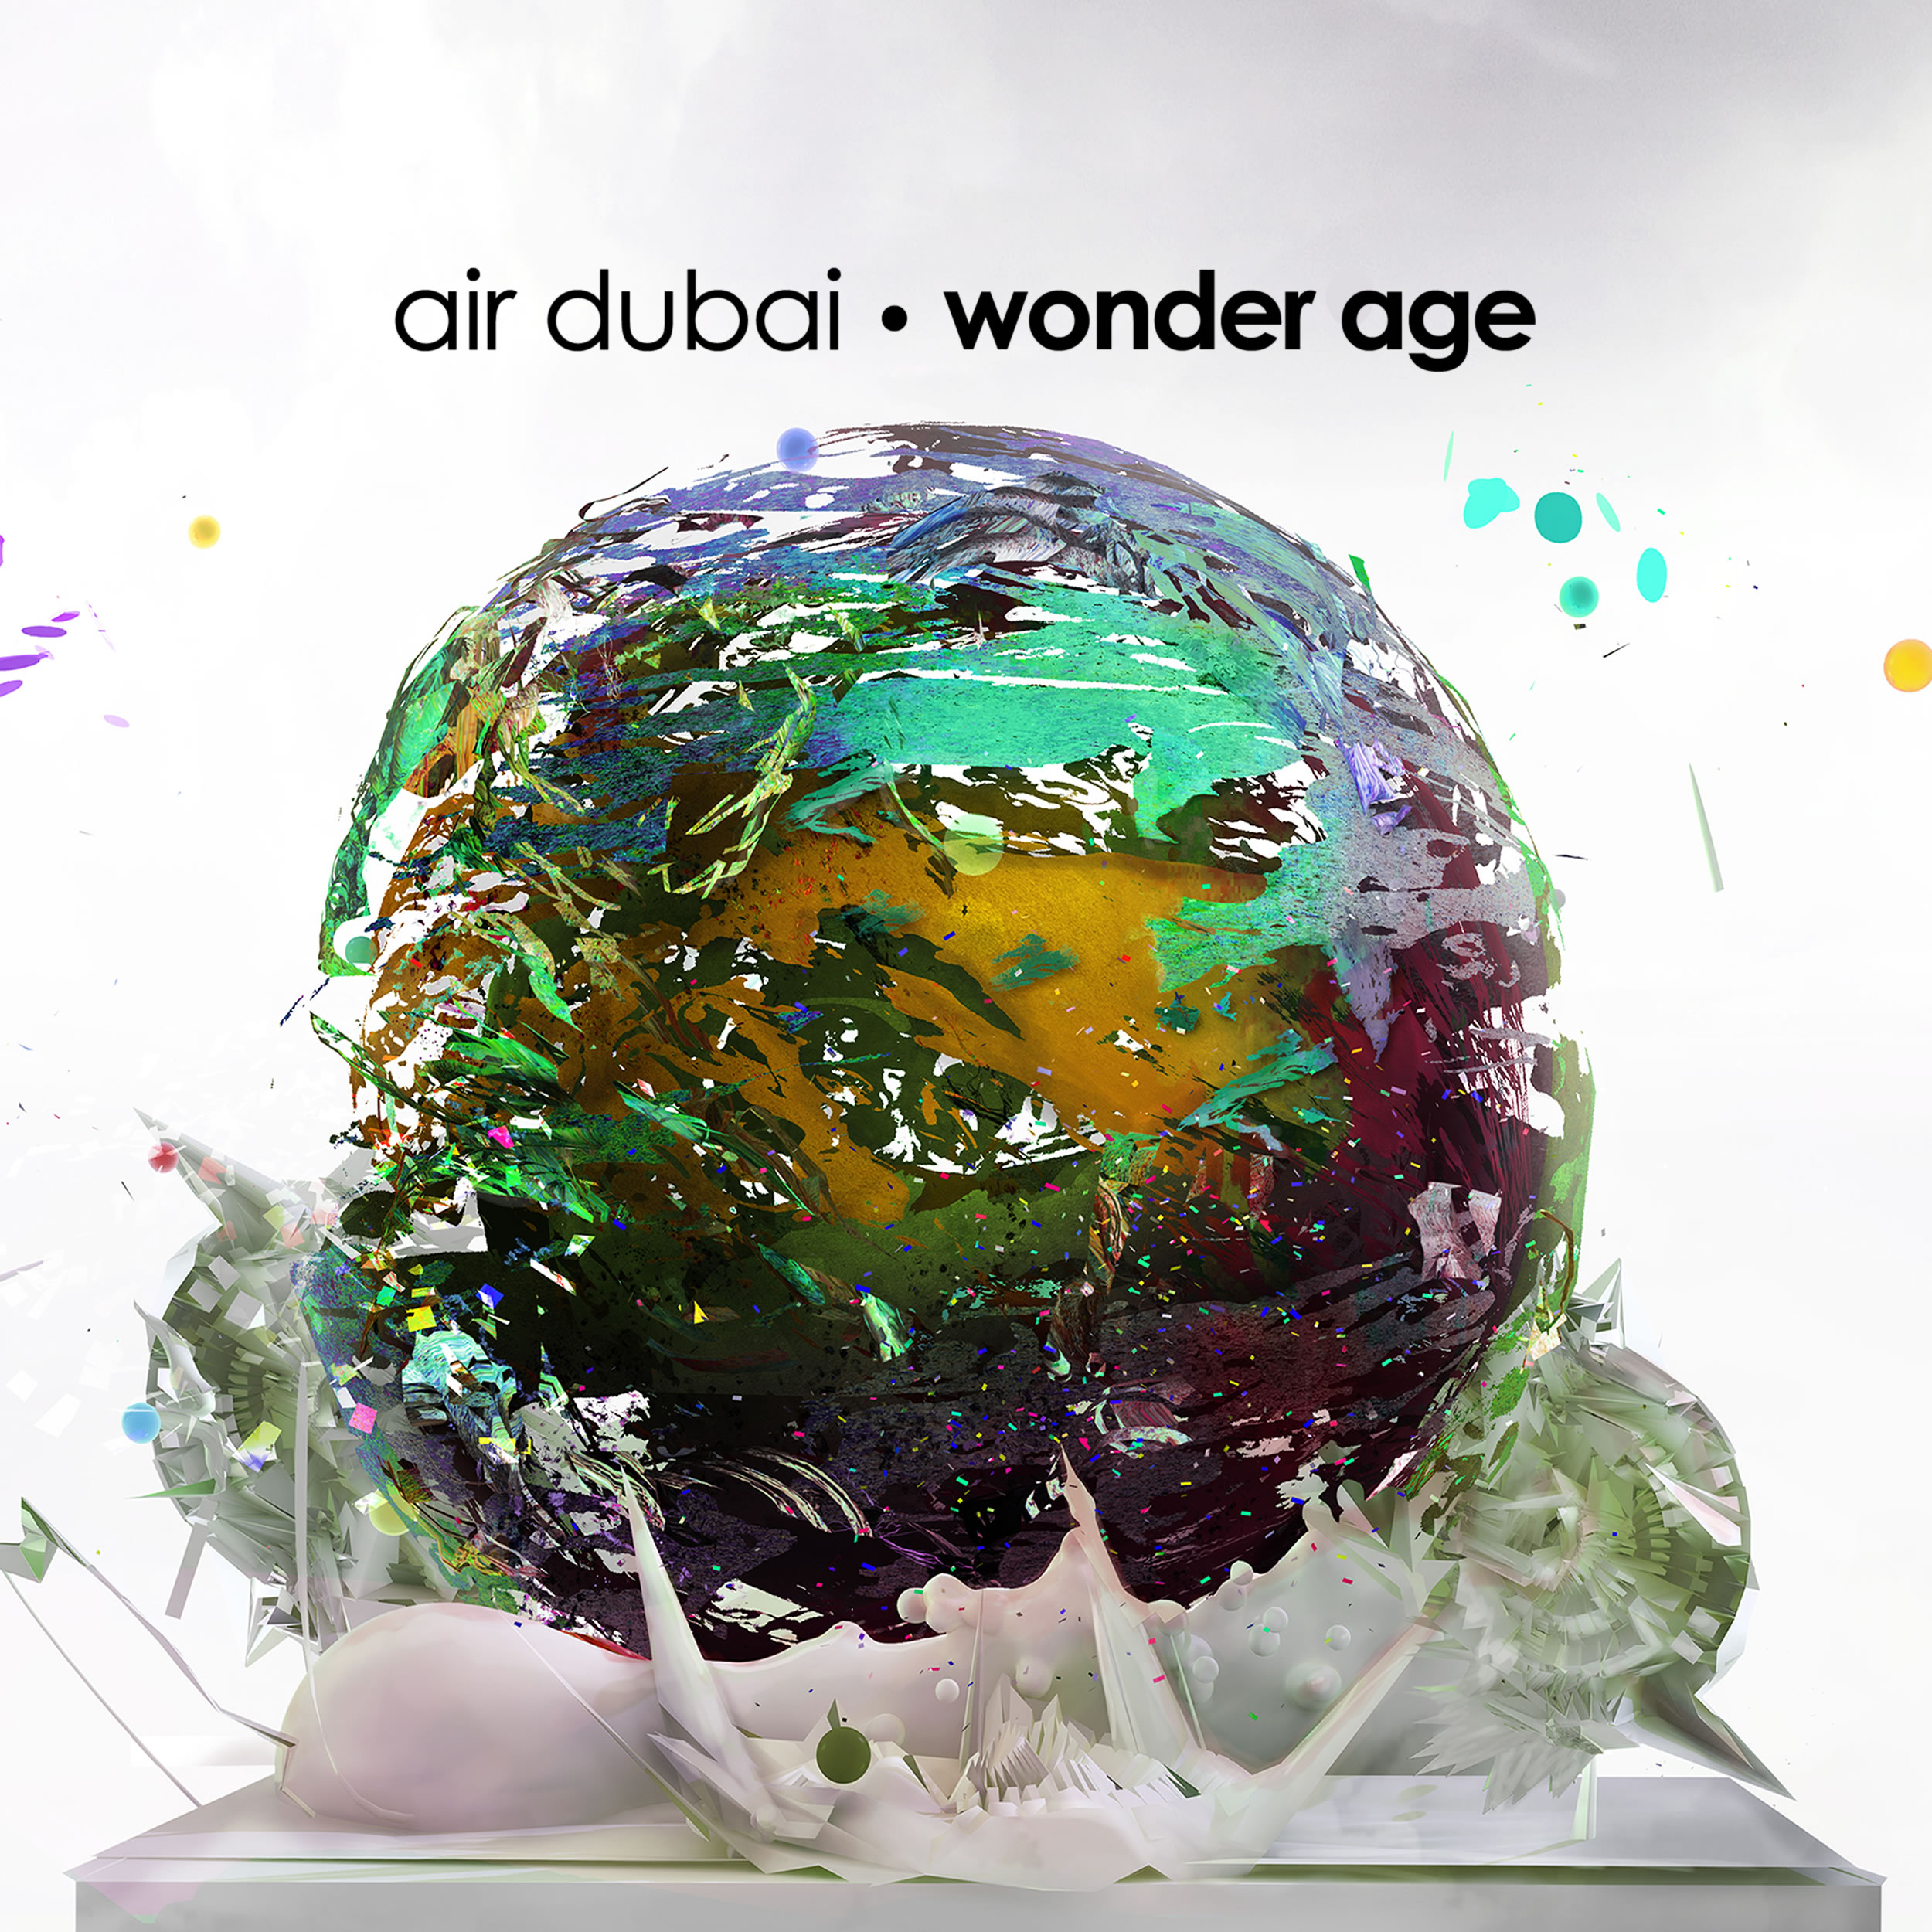 Air Dubai - Wonder Age